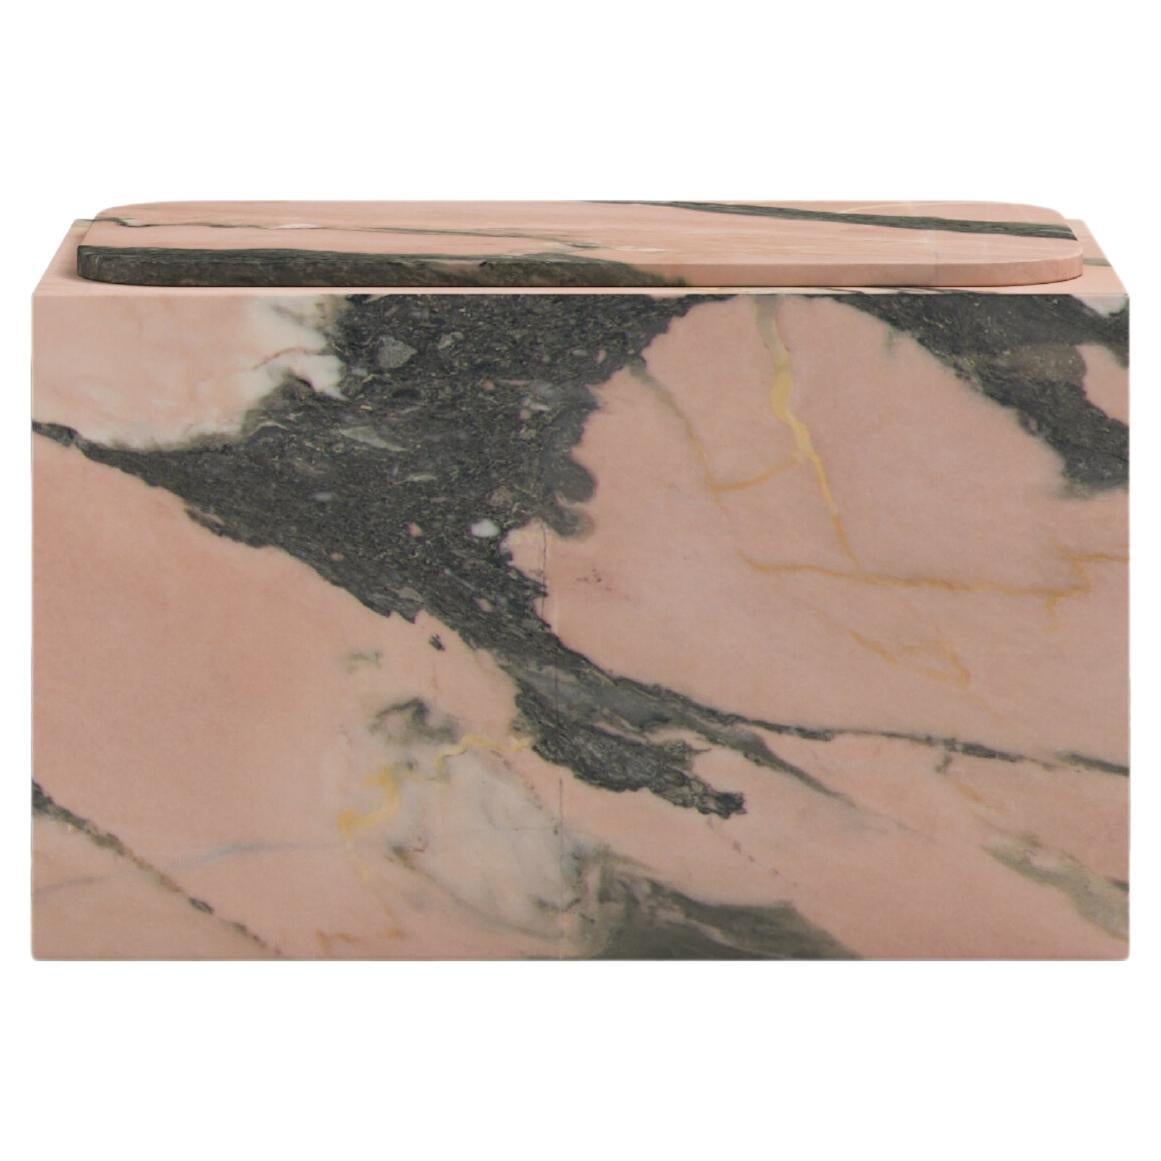 FORM(LA) Cubo Rectangle Side Table 30”L x 16"W x 19”H Portogallo Rosa Marble For Sale